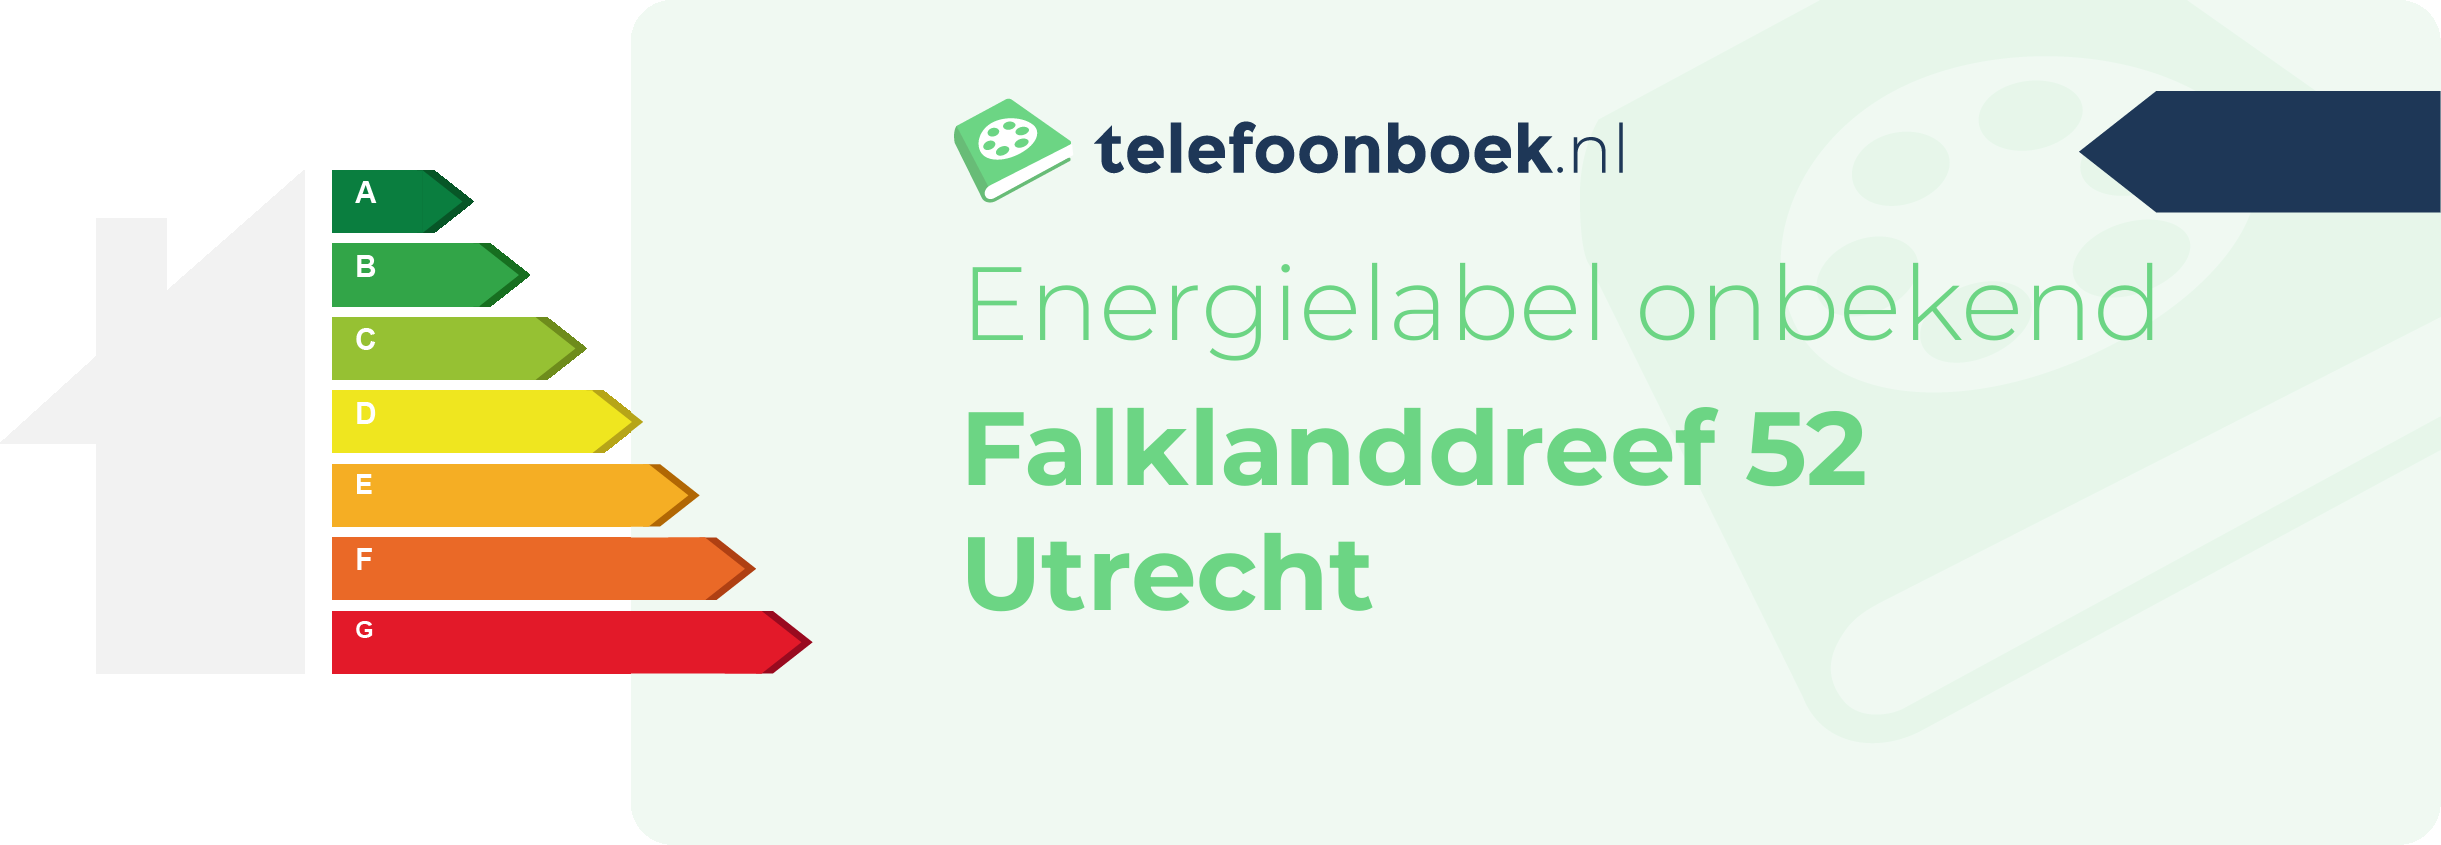 Energielabel Falklanddreef 52 Utrecht